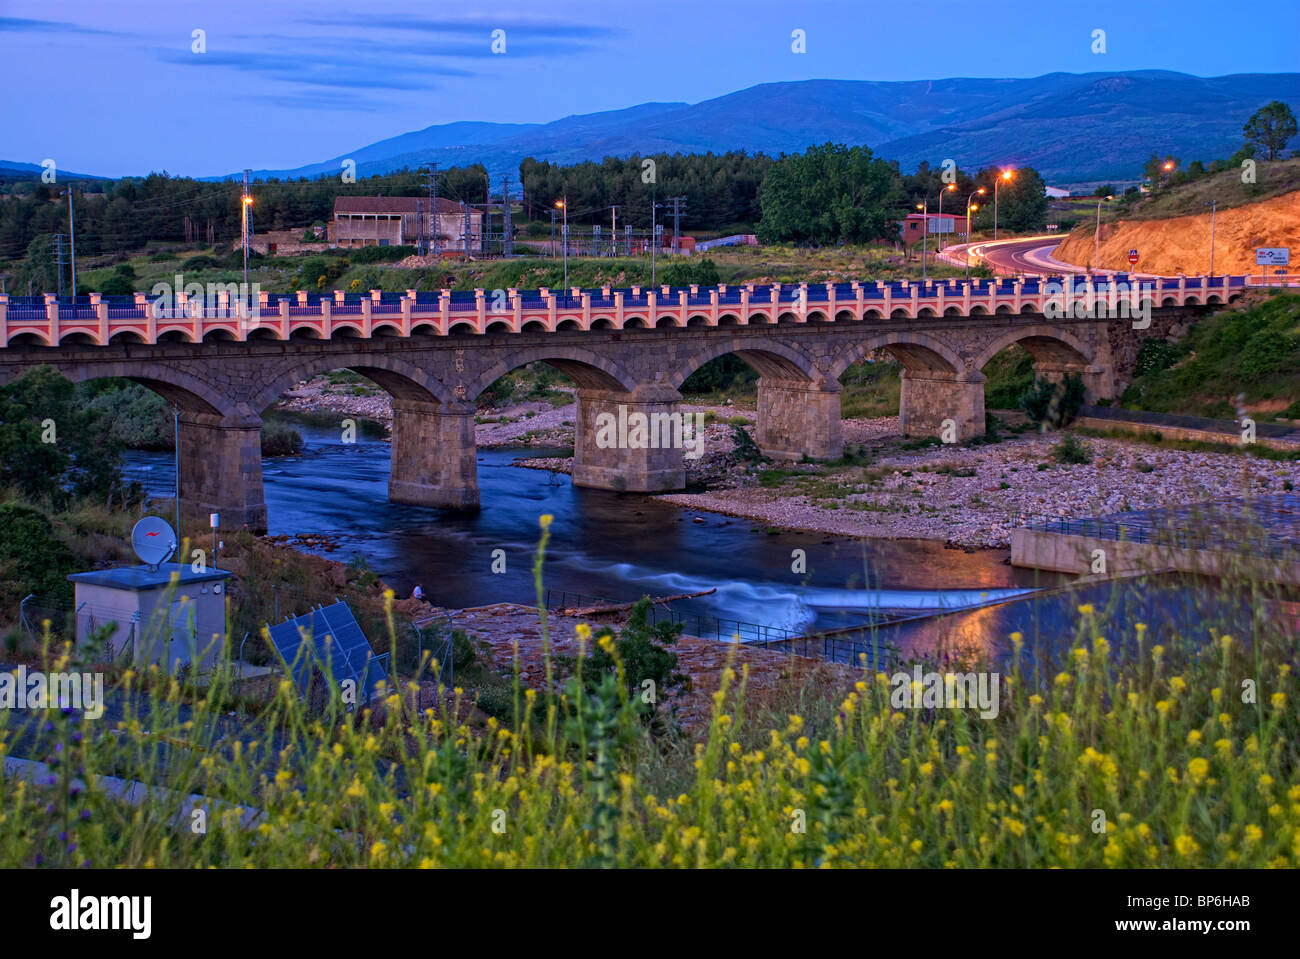 Ponte sul fiume Tormes. El Barco de avila. Provincia di Avila. Castilla y Leon. Spagna. Foto Stock